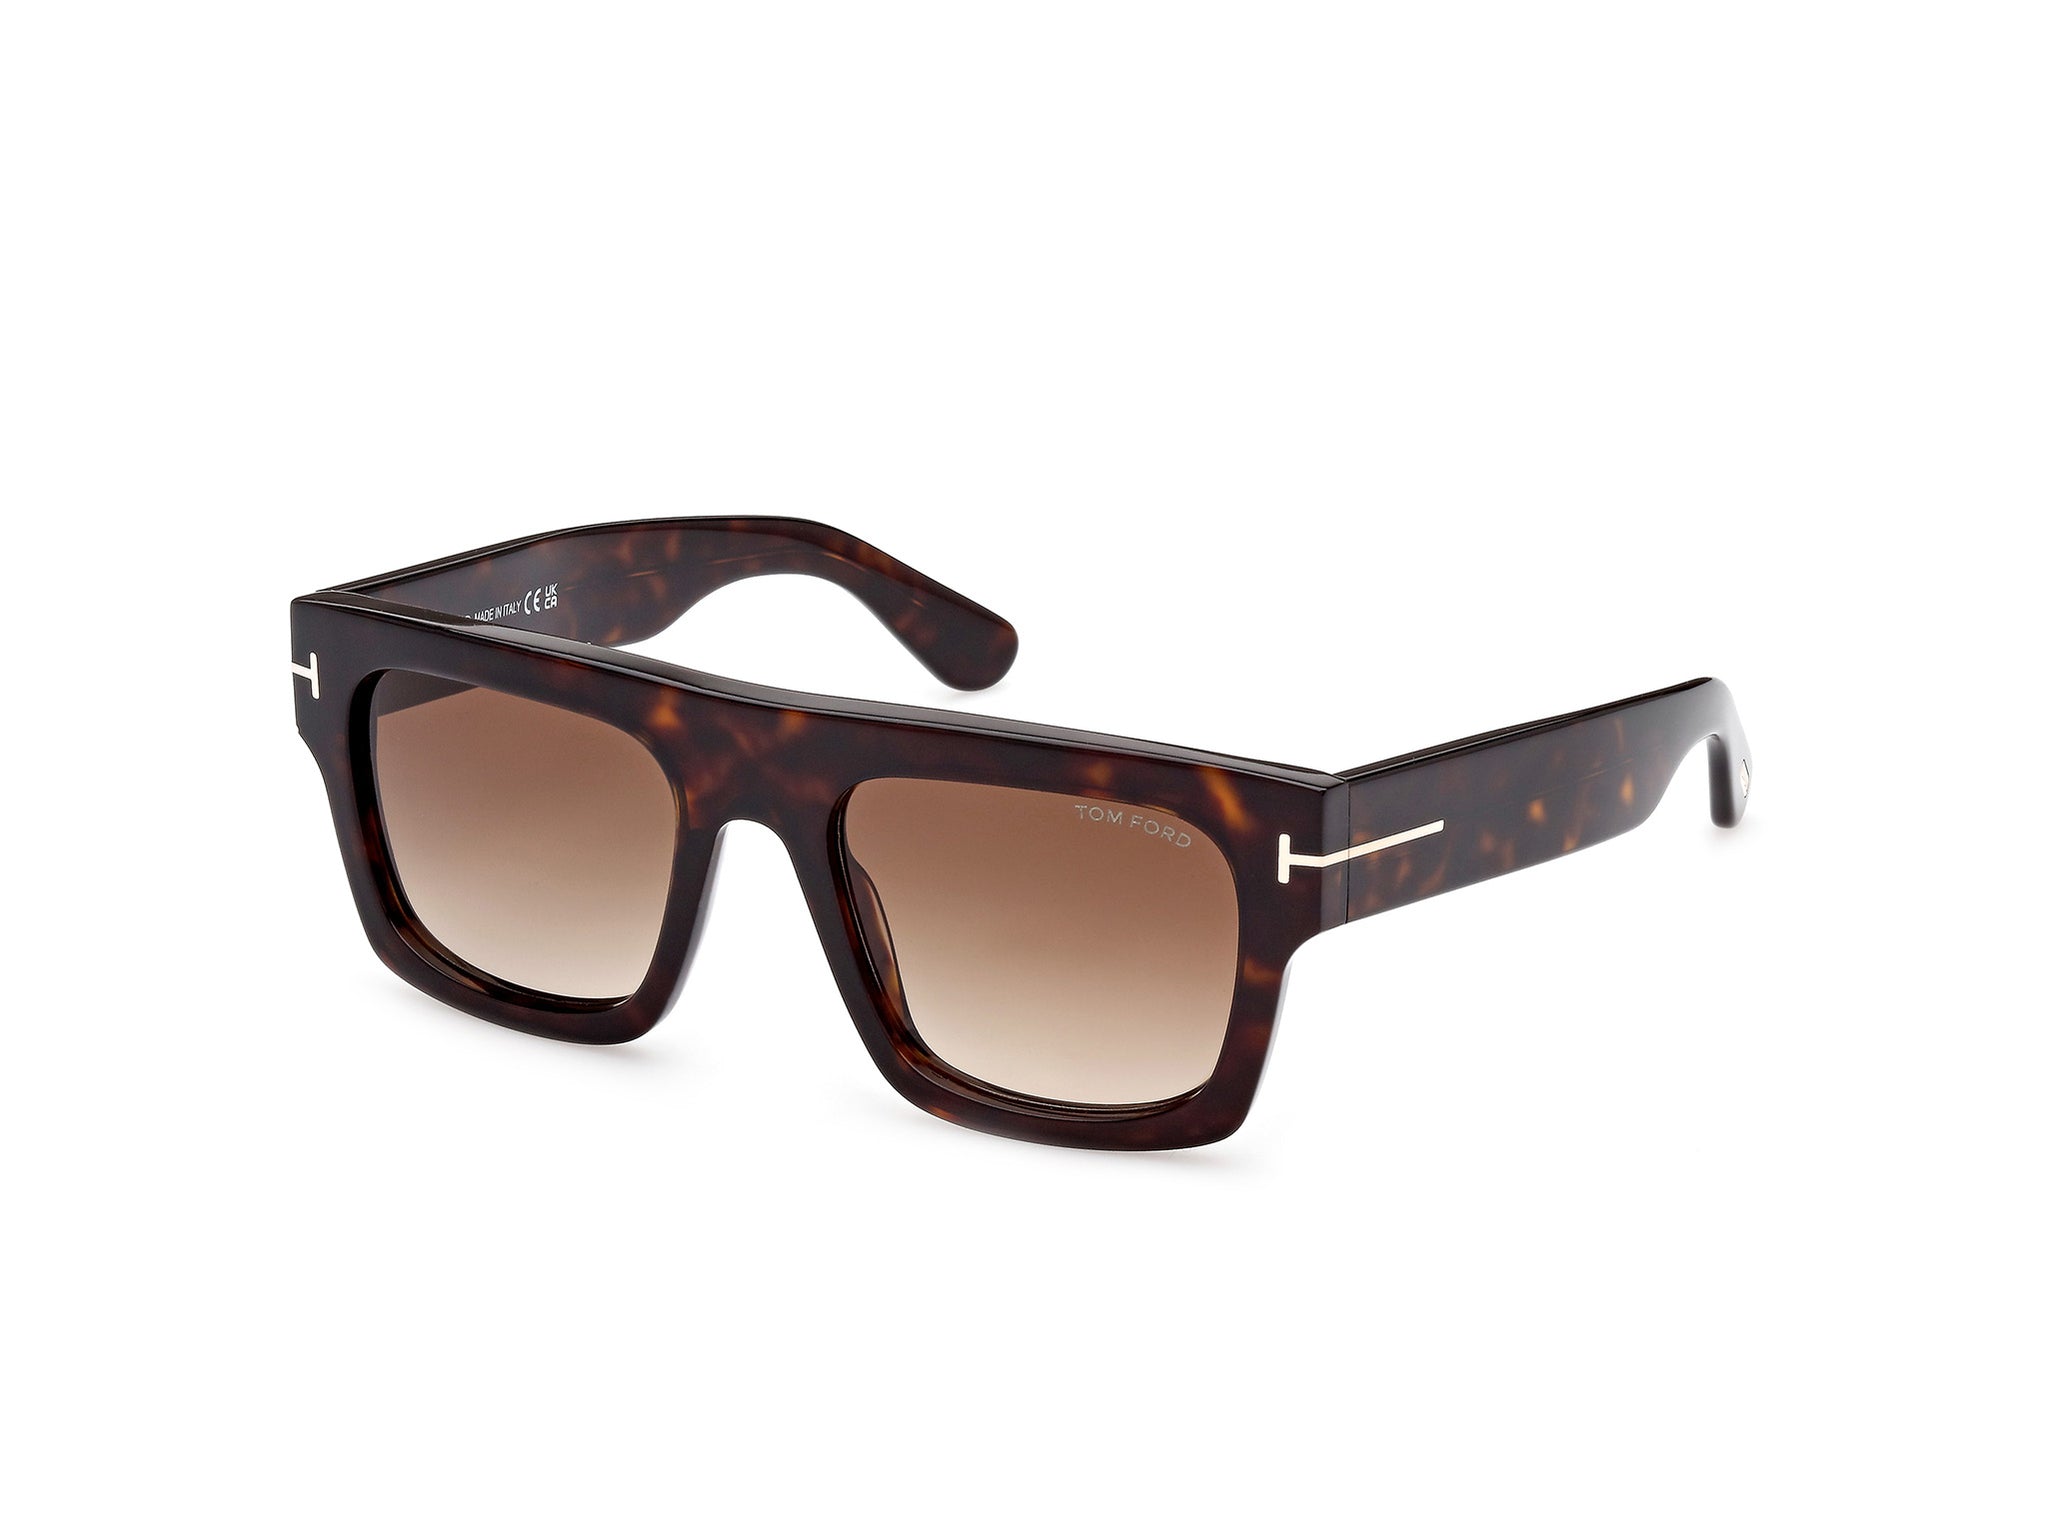 Tom Ford Fausto TF711 Sunglasses | Fashion Eyewear US